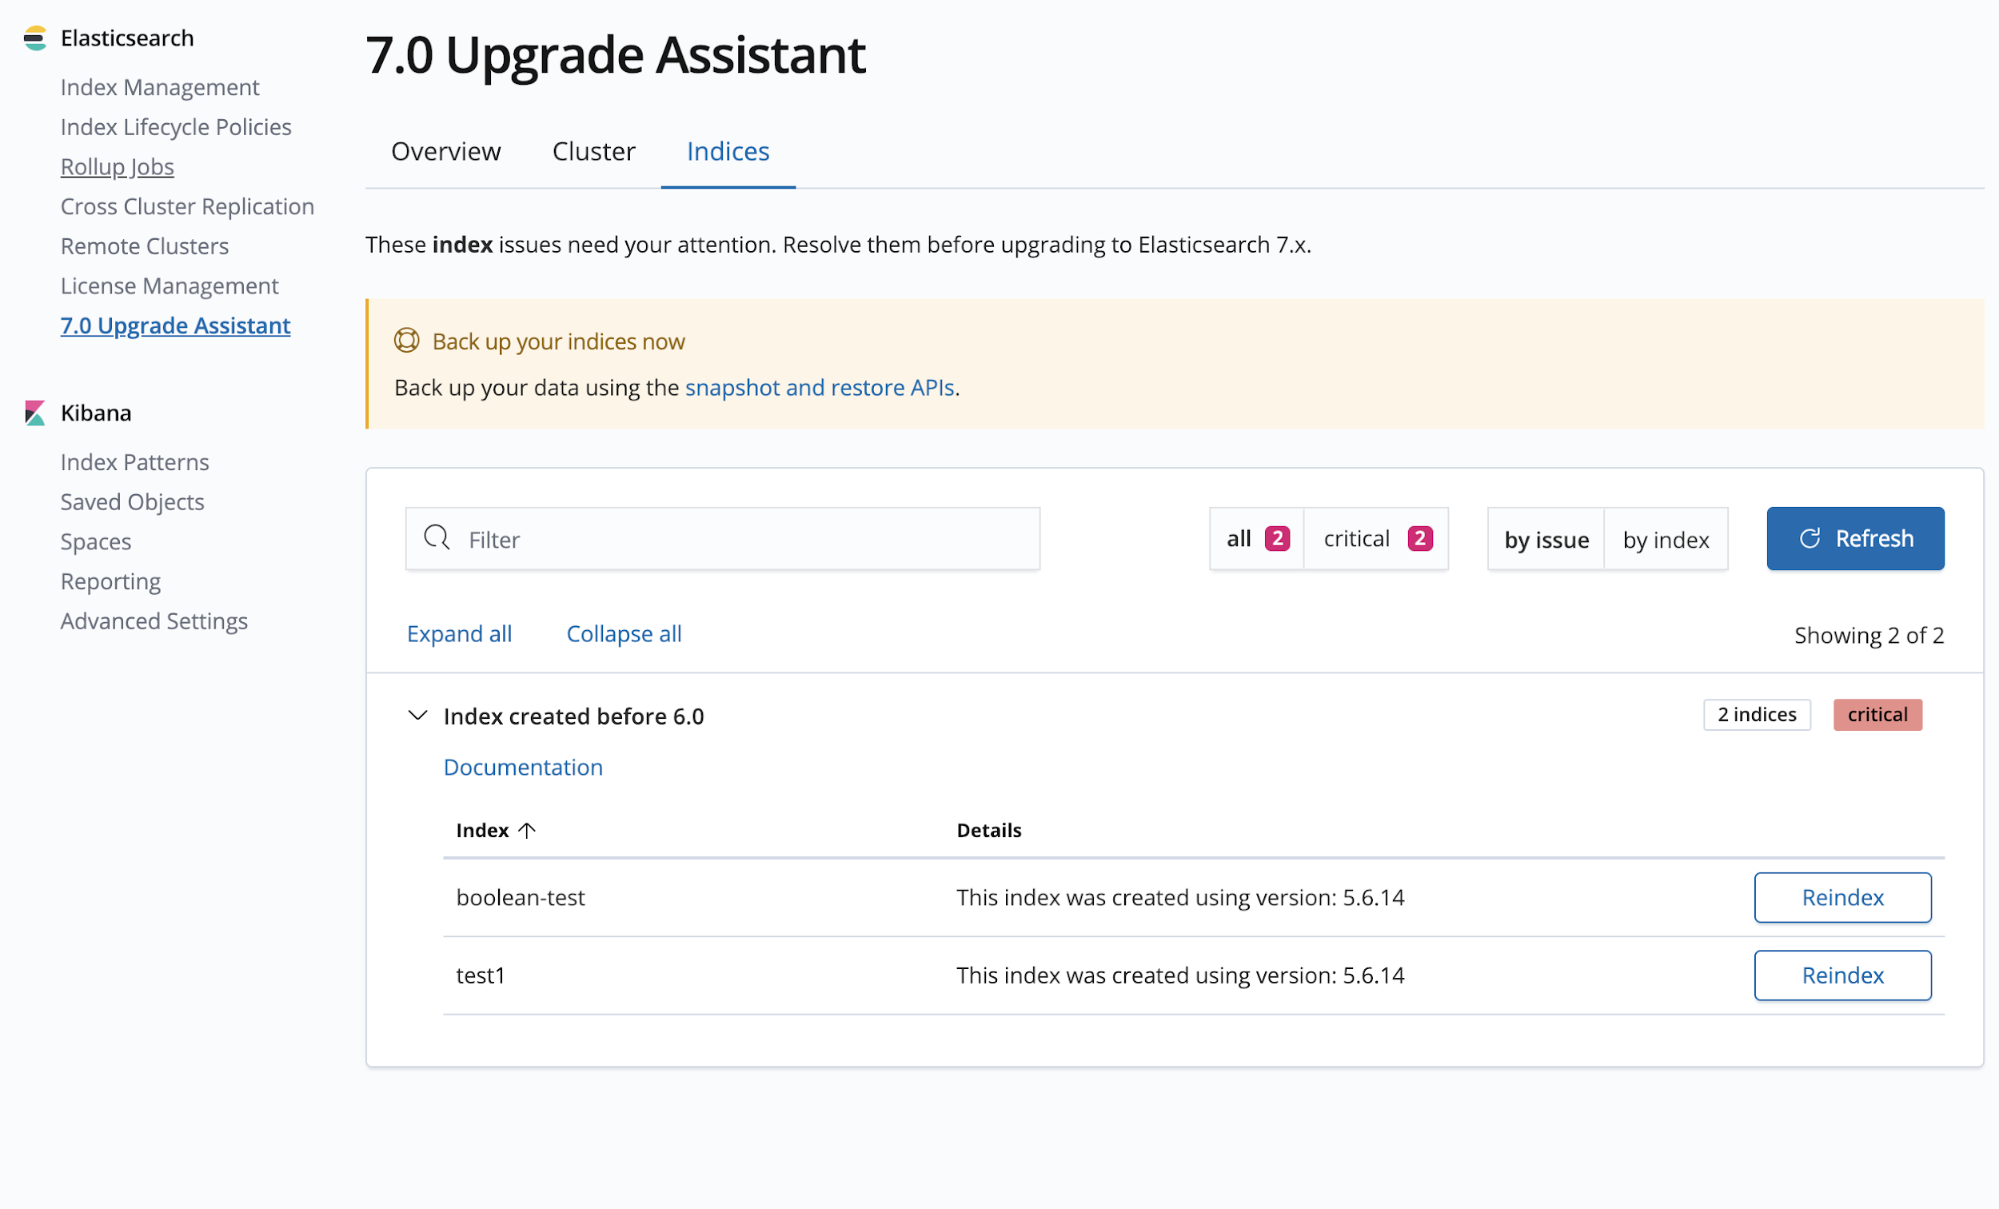 management-upgrade-assistant-7.0 (1).png